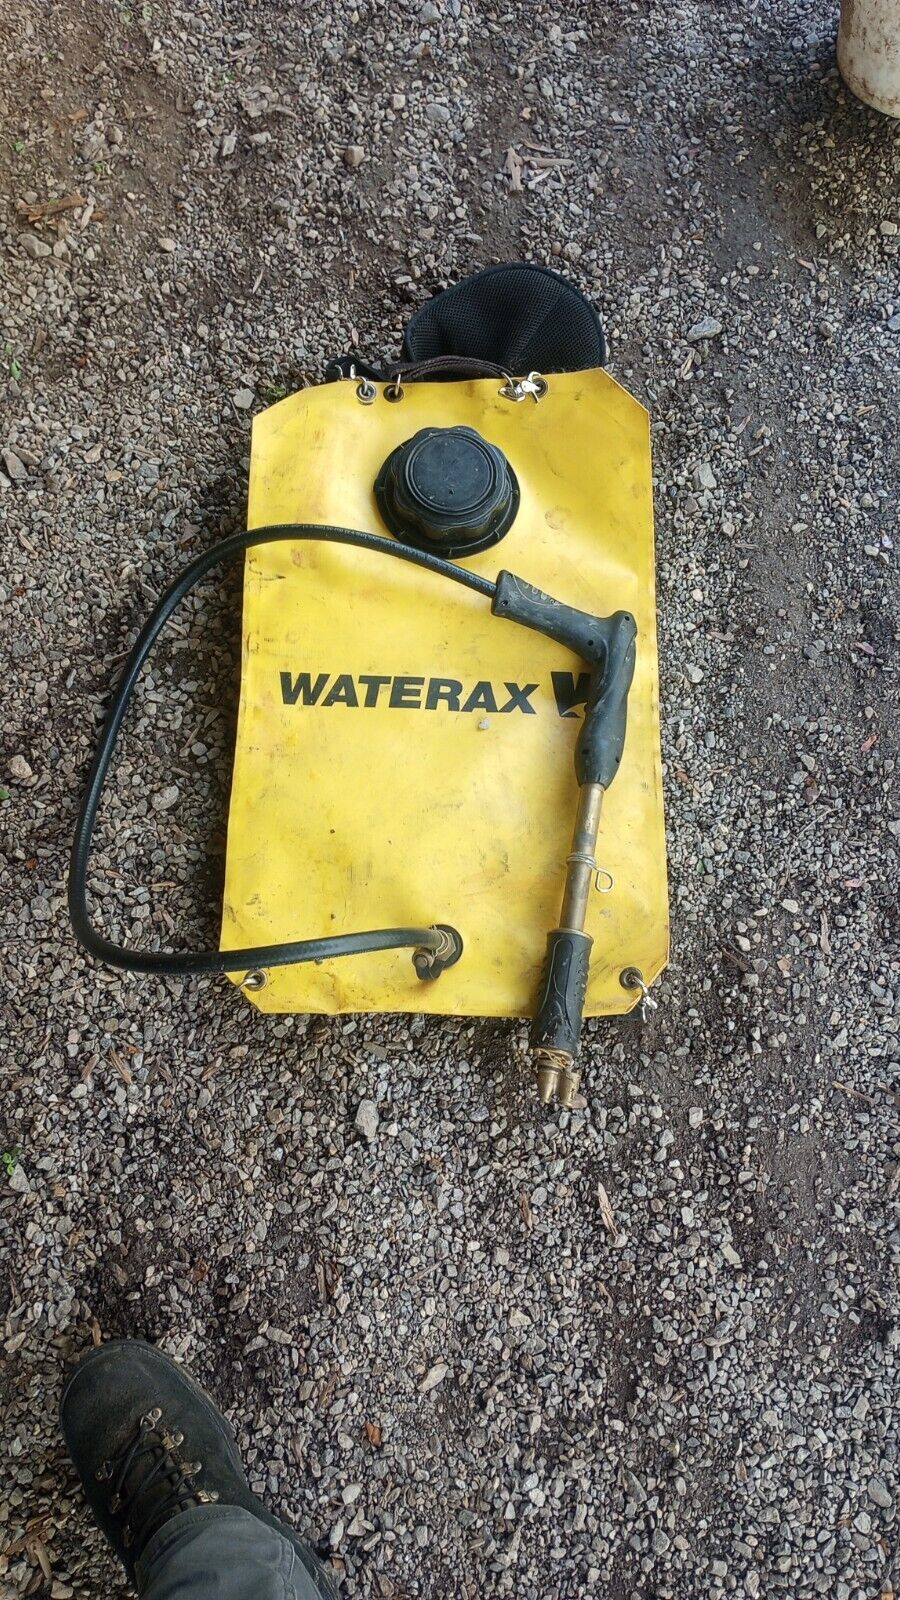 Waterax backpack fire pump